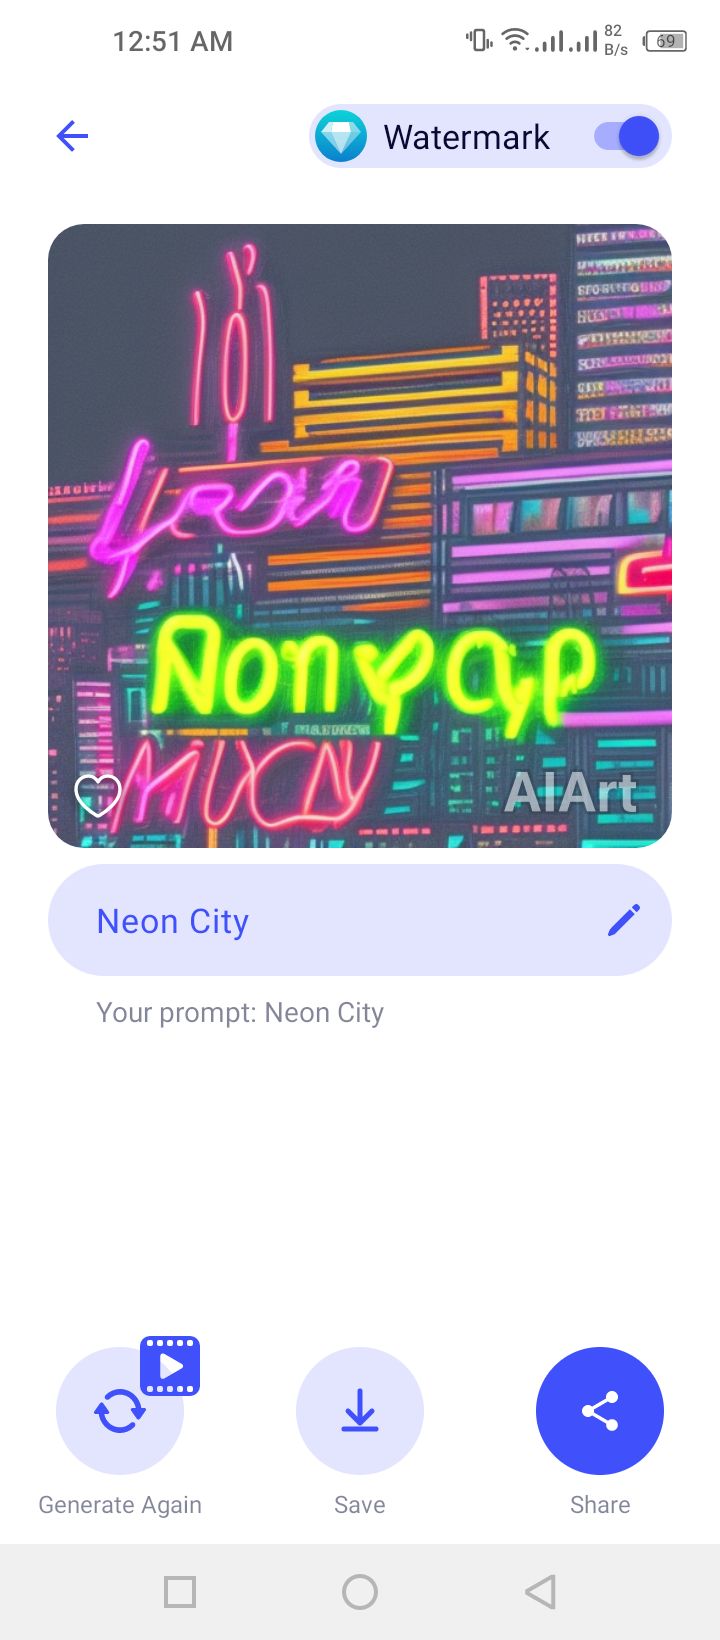 AI Art - Sample Using Neon City Prompt